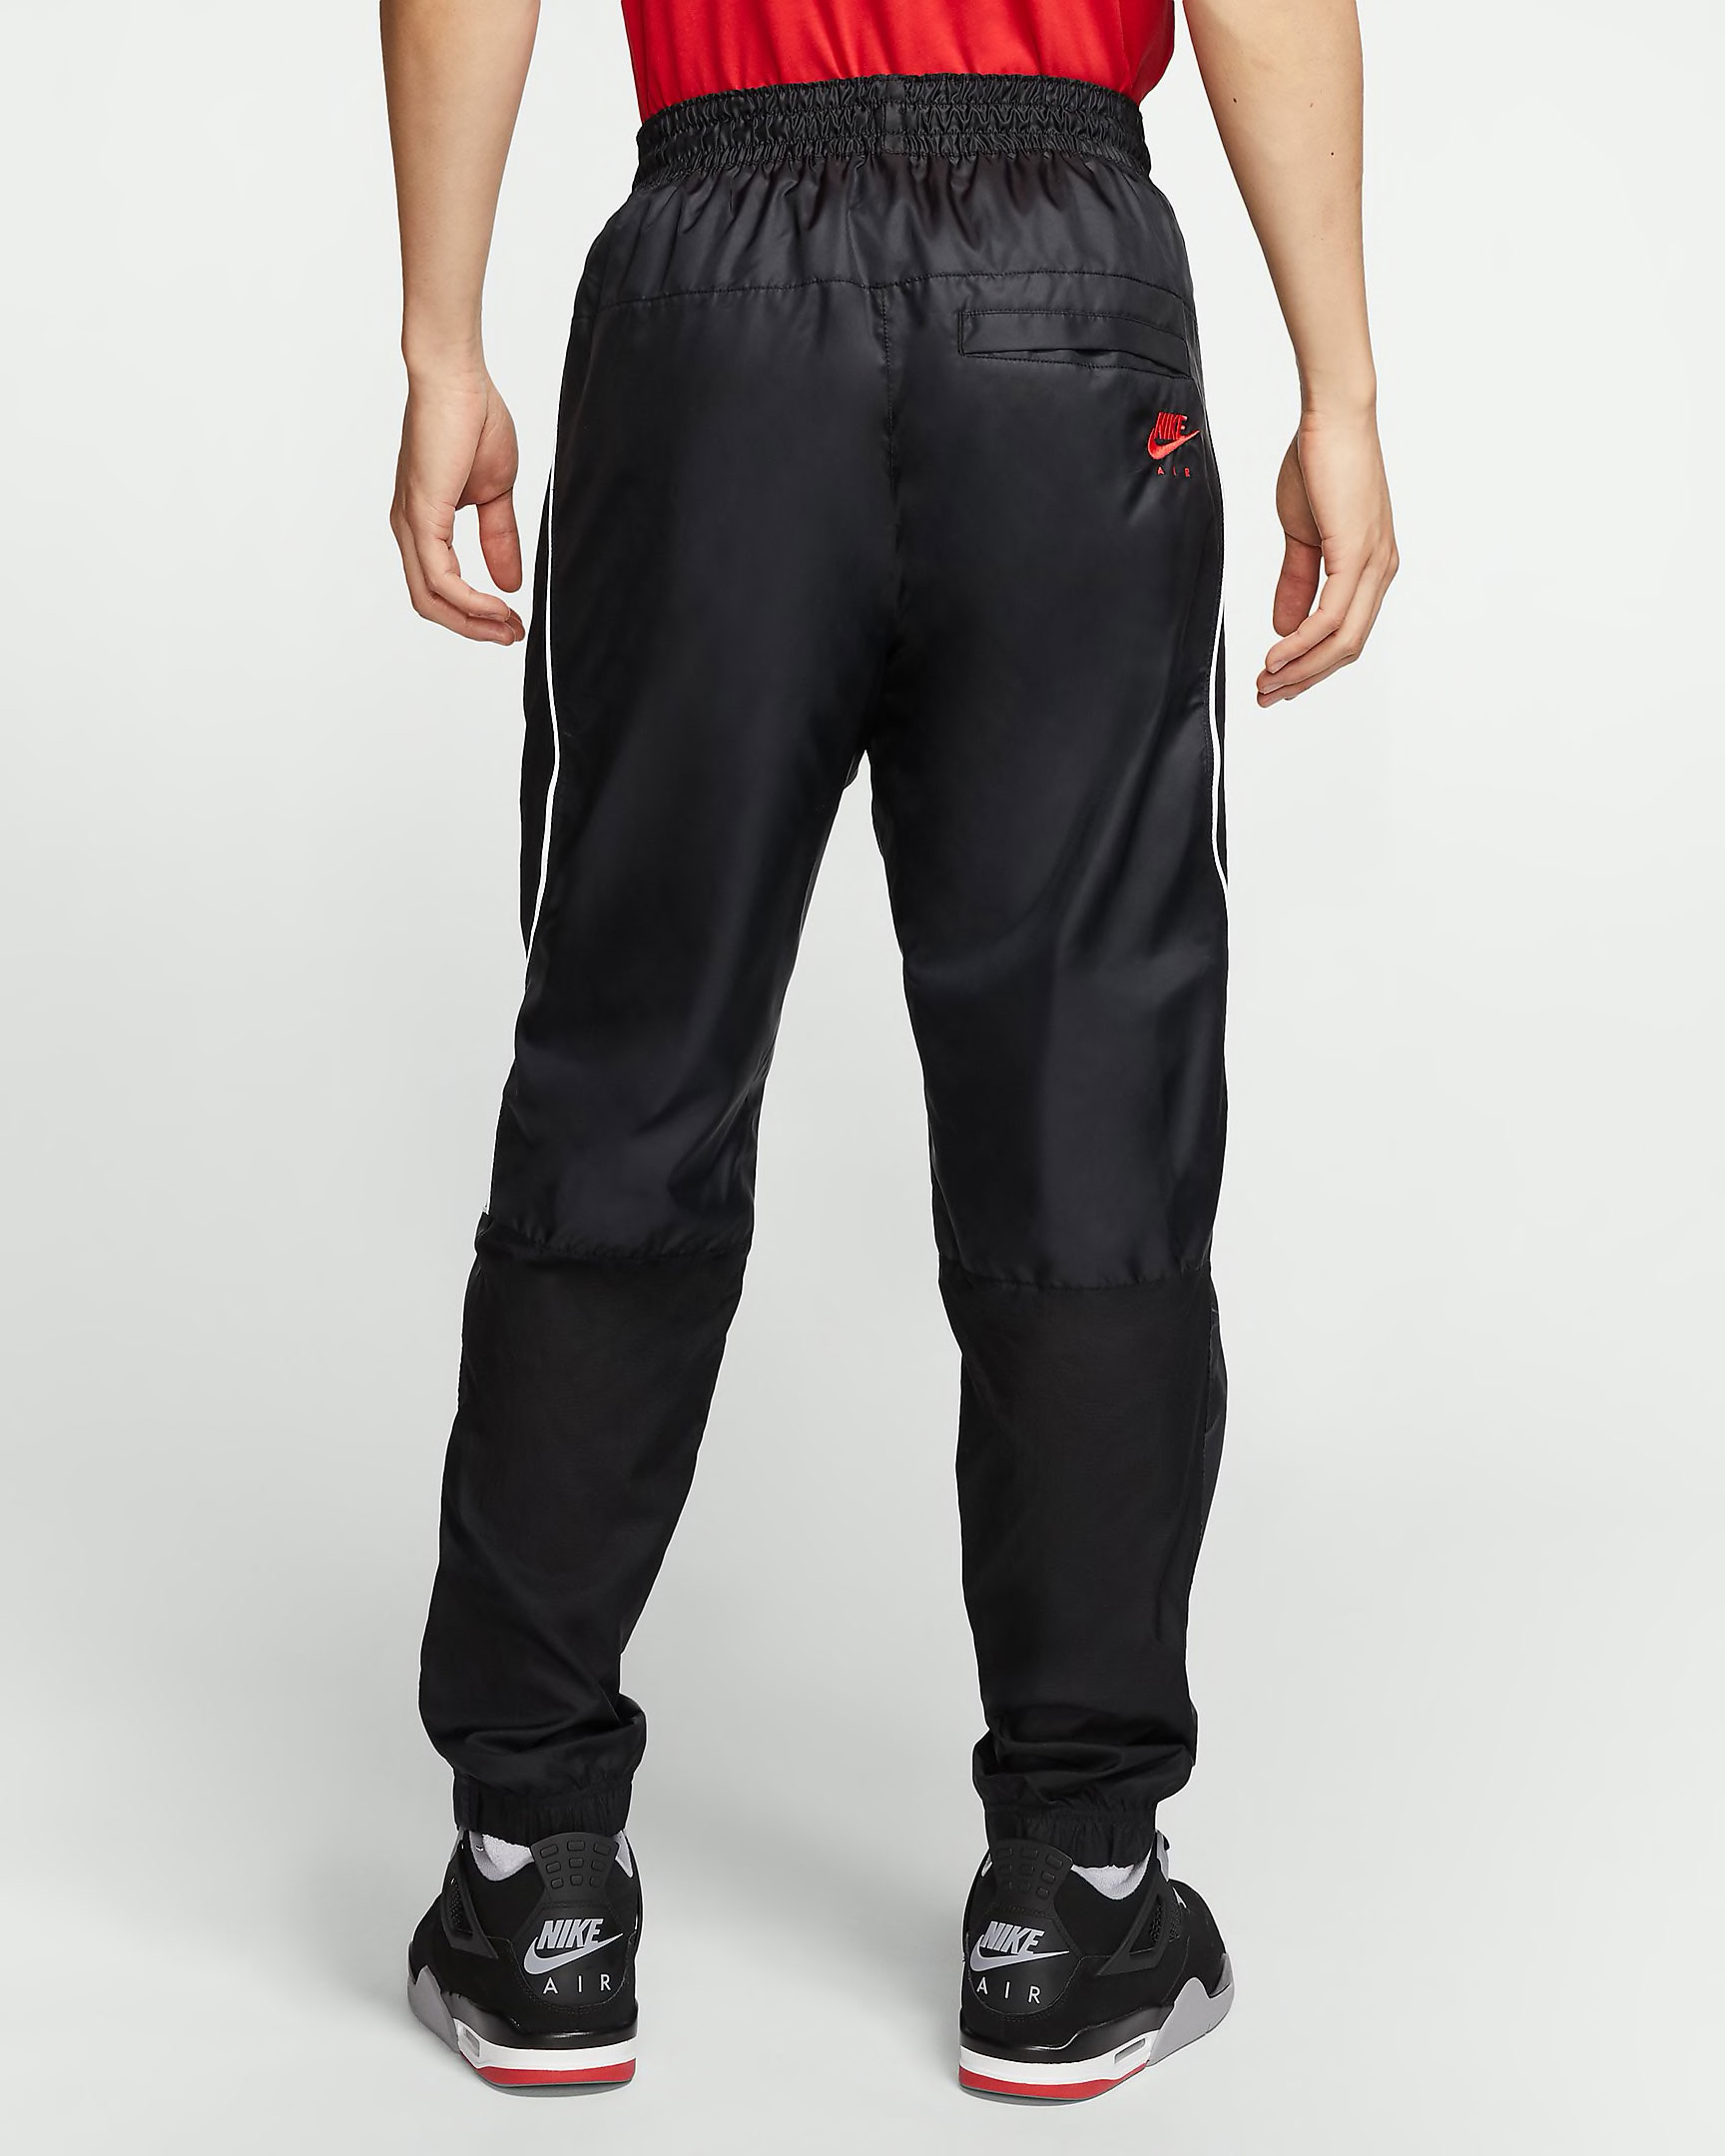 Air Jordan 5 Fire Red 2020 Pants | SneakerFits.com